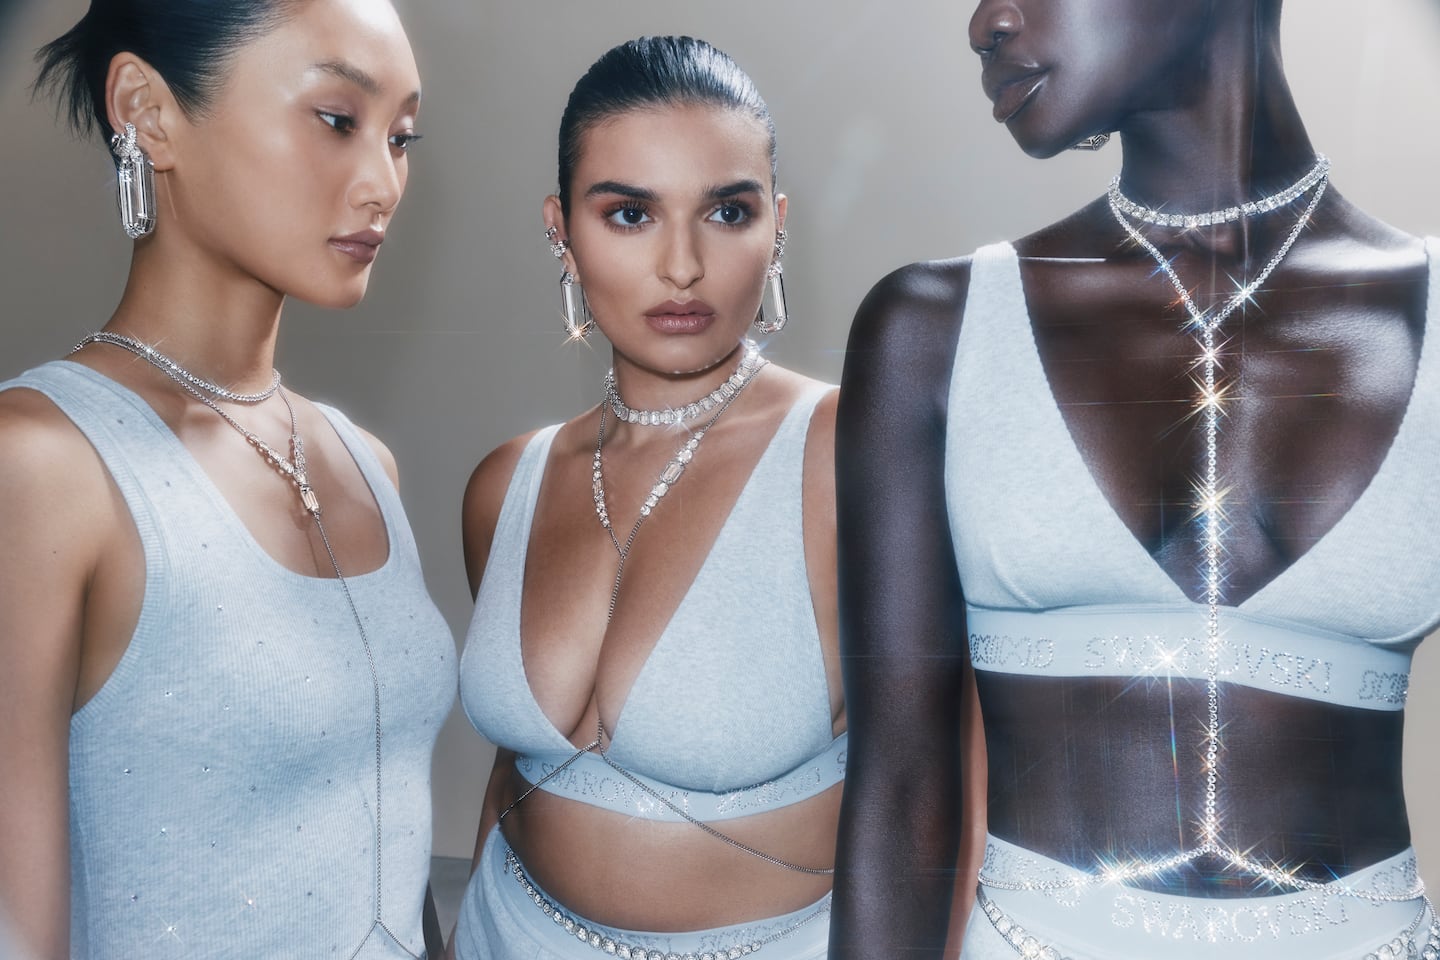 Three models pose in Skims underwear and Swarovski body jewellery.